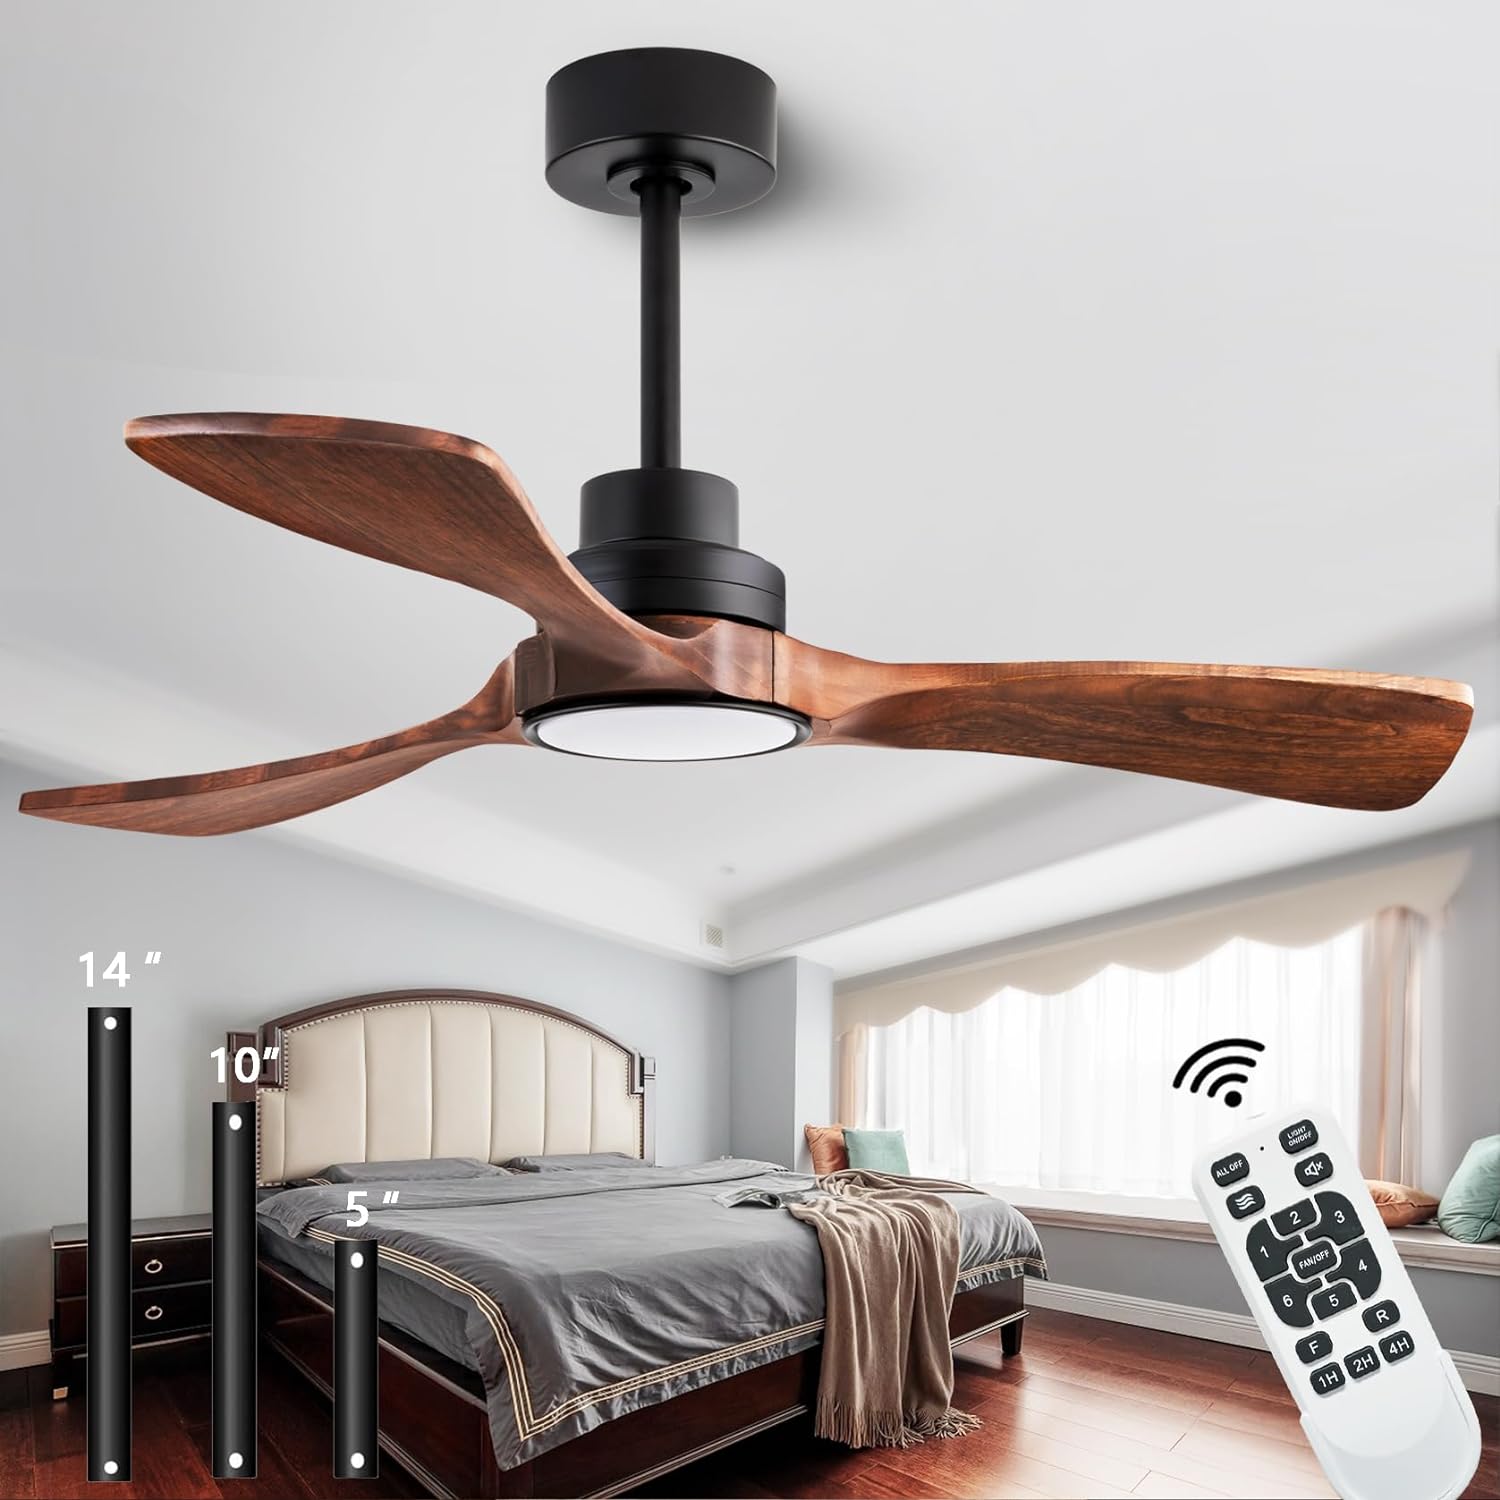 42 inch fan with lights